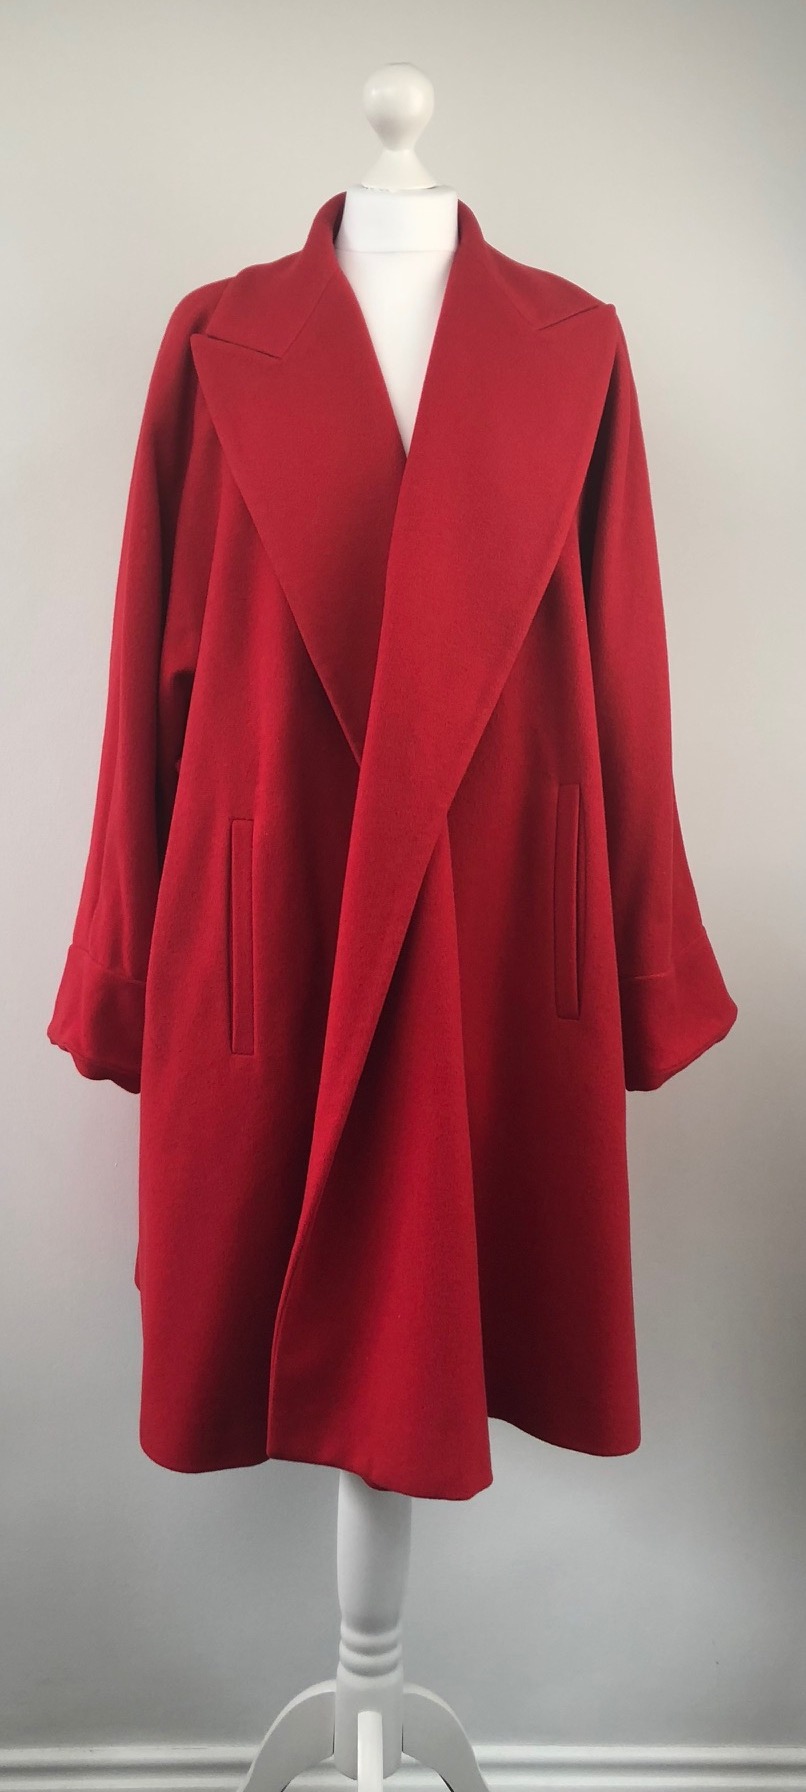 Vintage 1990's Louis Feraud Wool/Cashmere Blend Blazer/Jacket - Ruby Lane